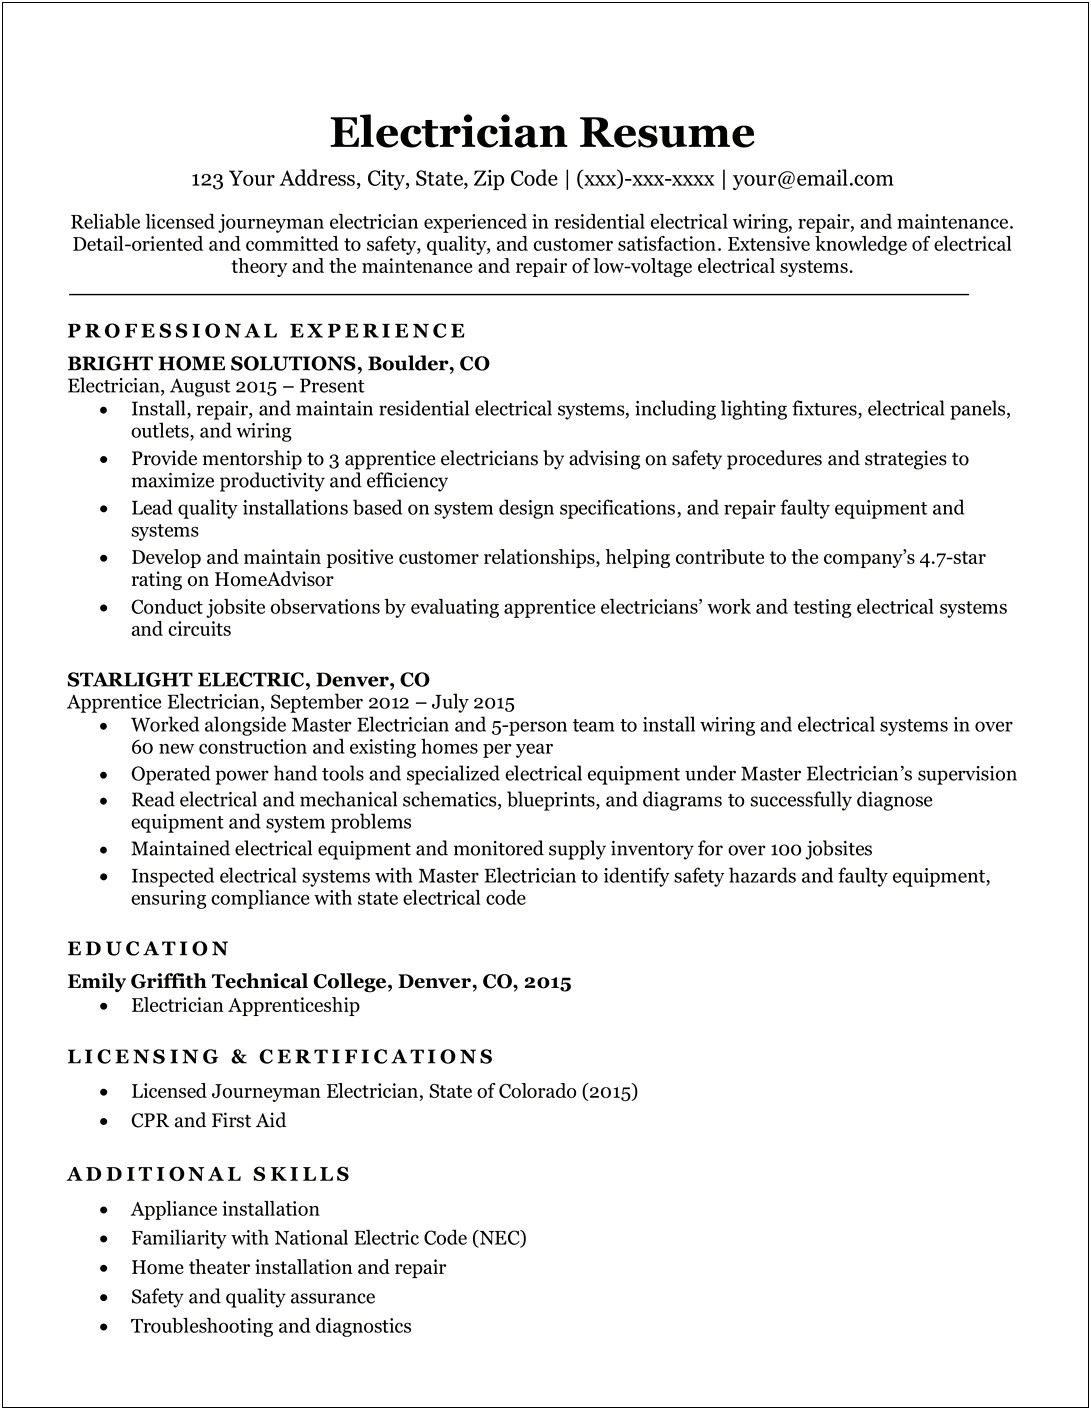 Electrician Job Description For Resume